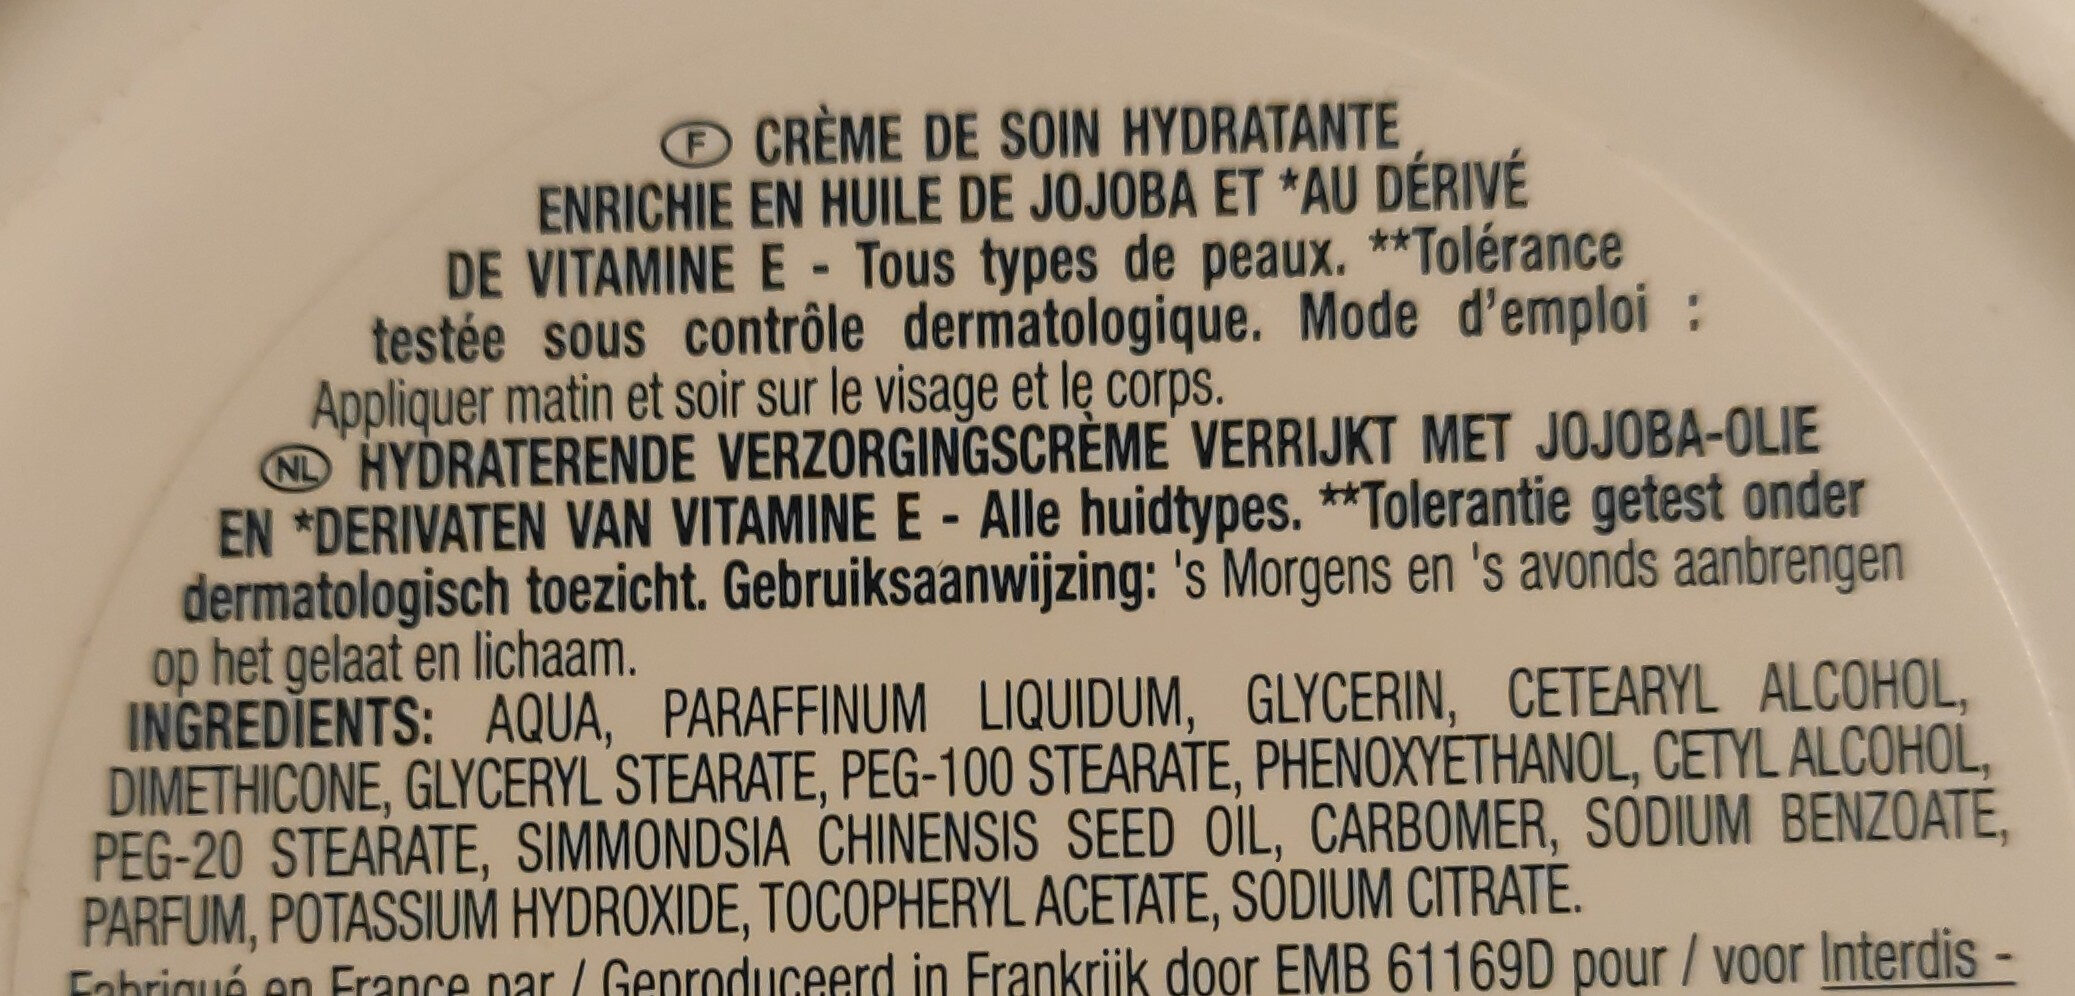 Crème hydradante visage et corps - Ingredients - fr